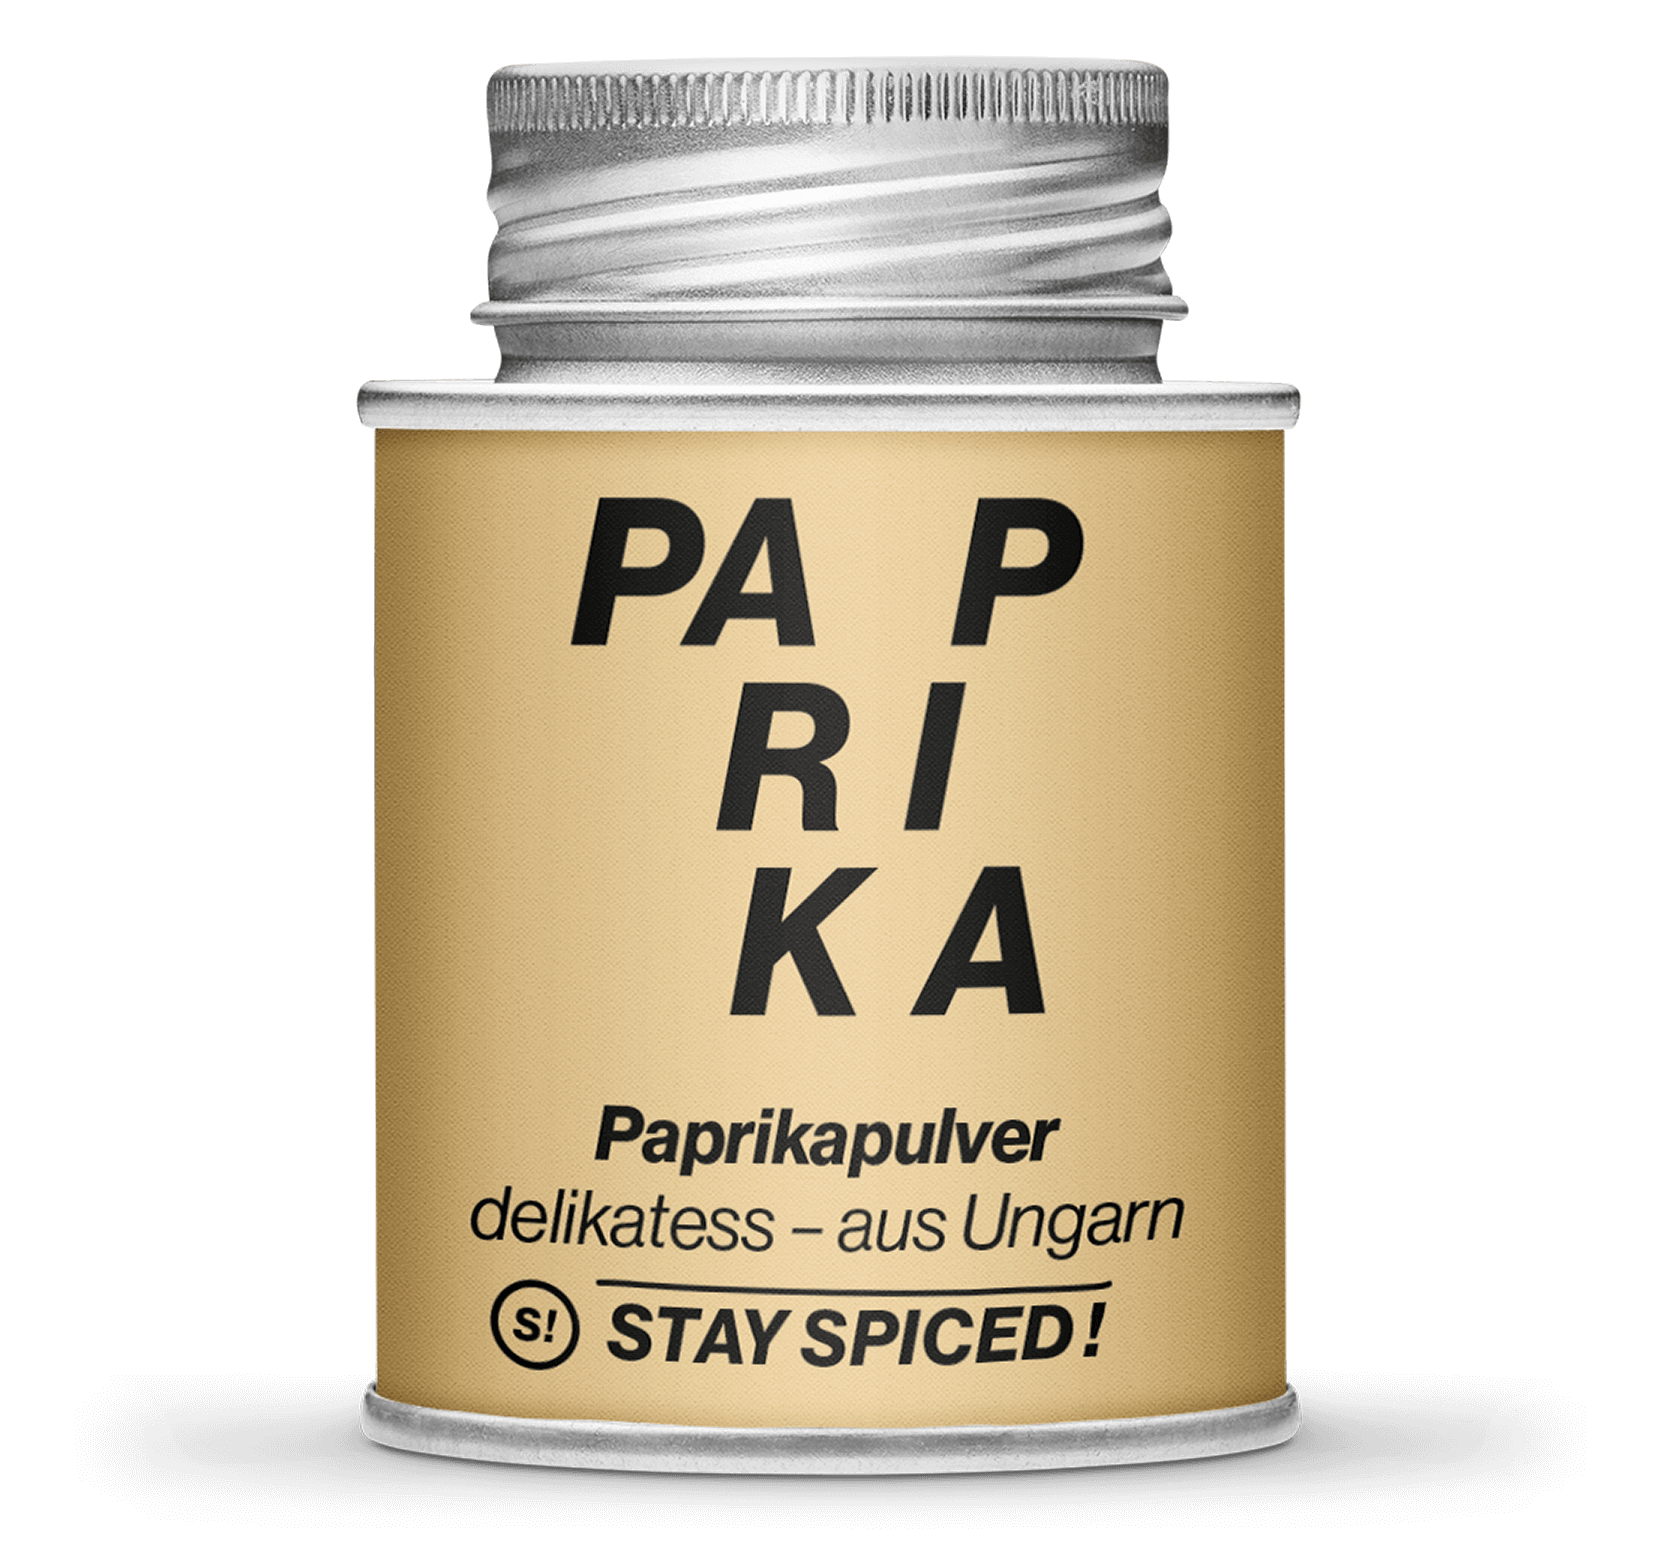 Paprika delikatess - original ungarisch